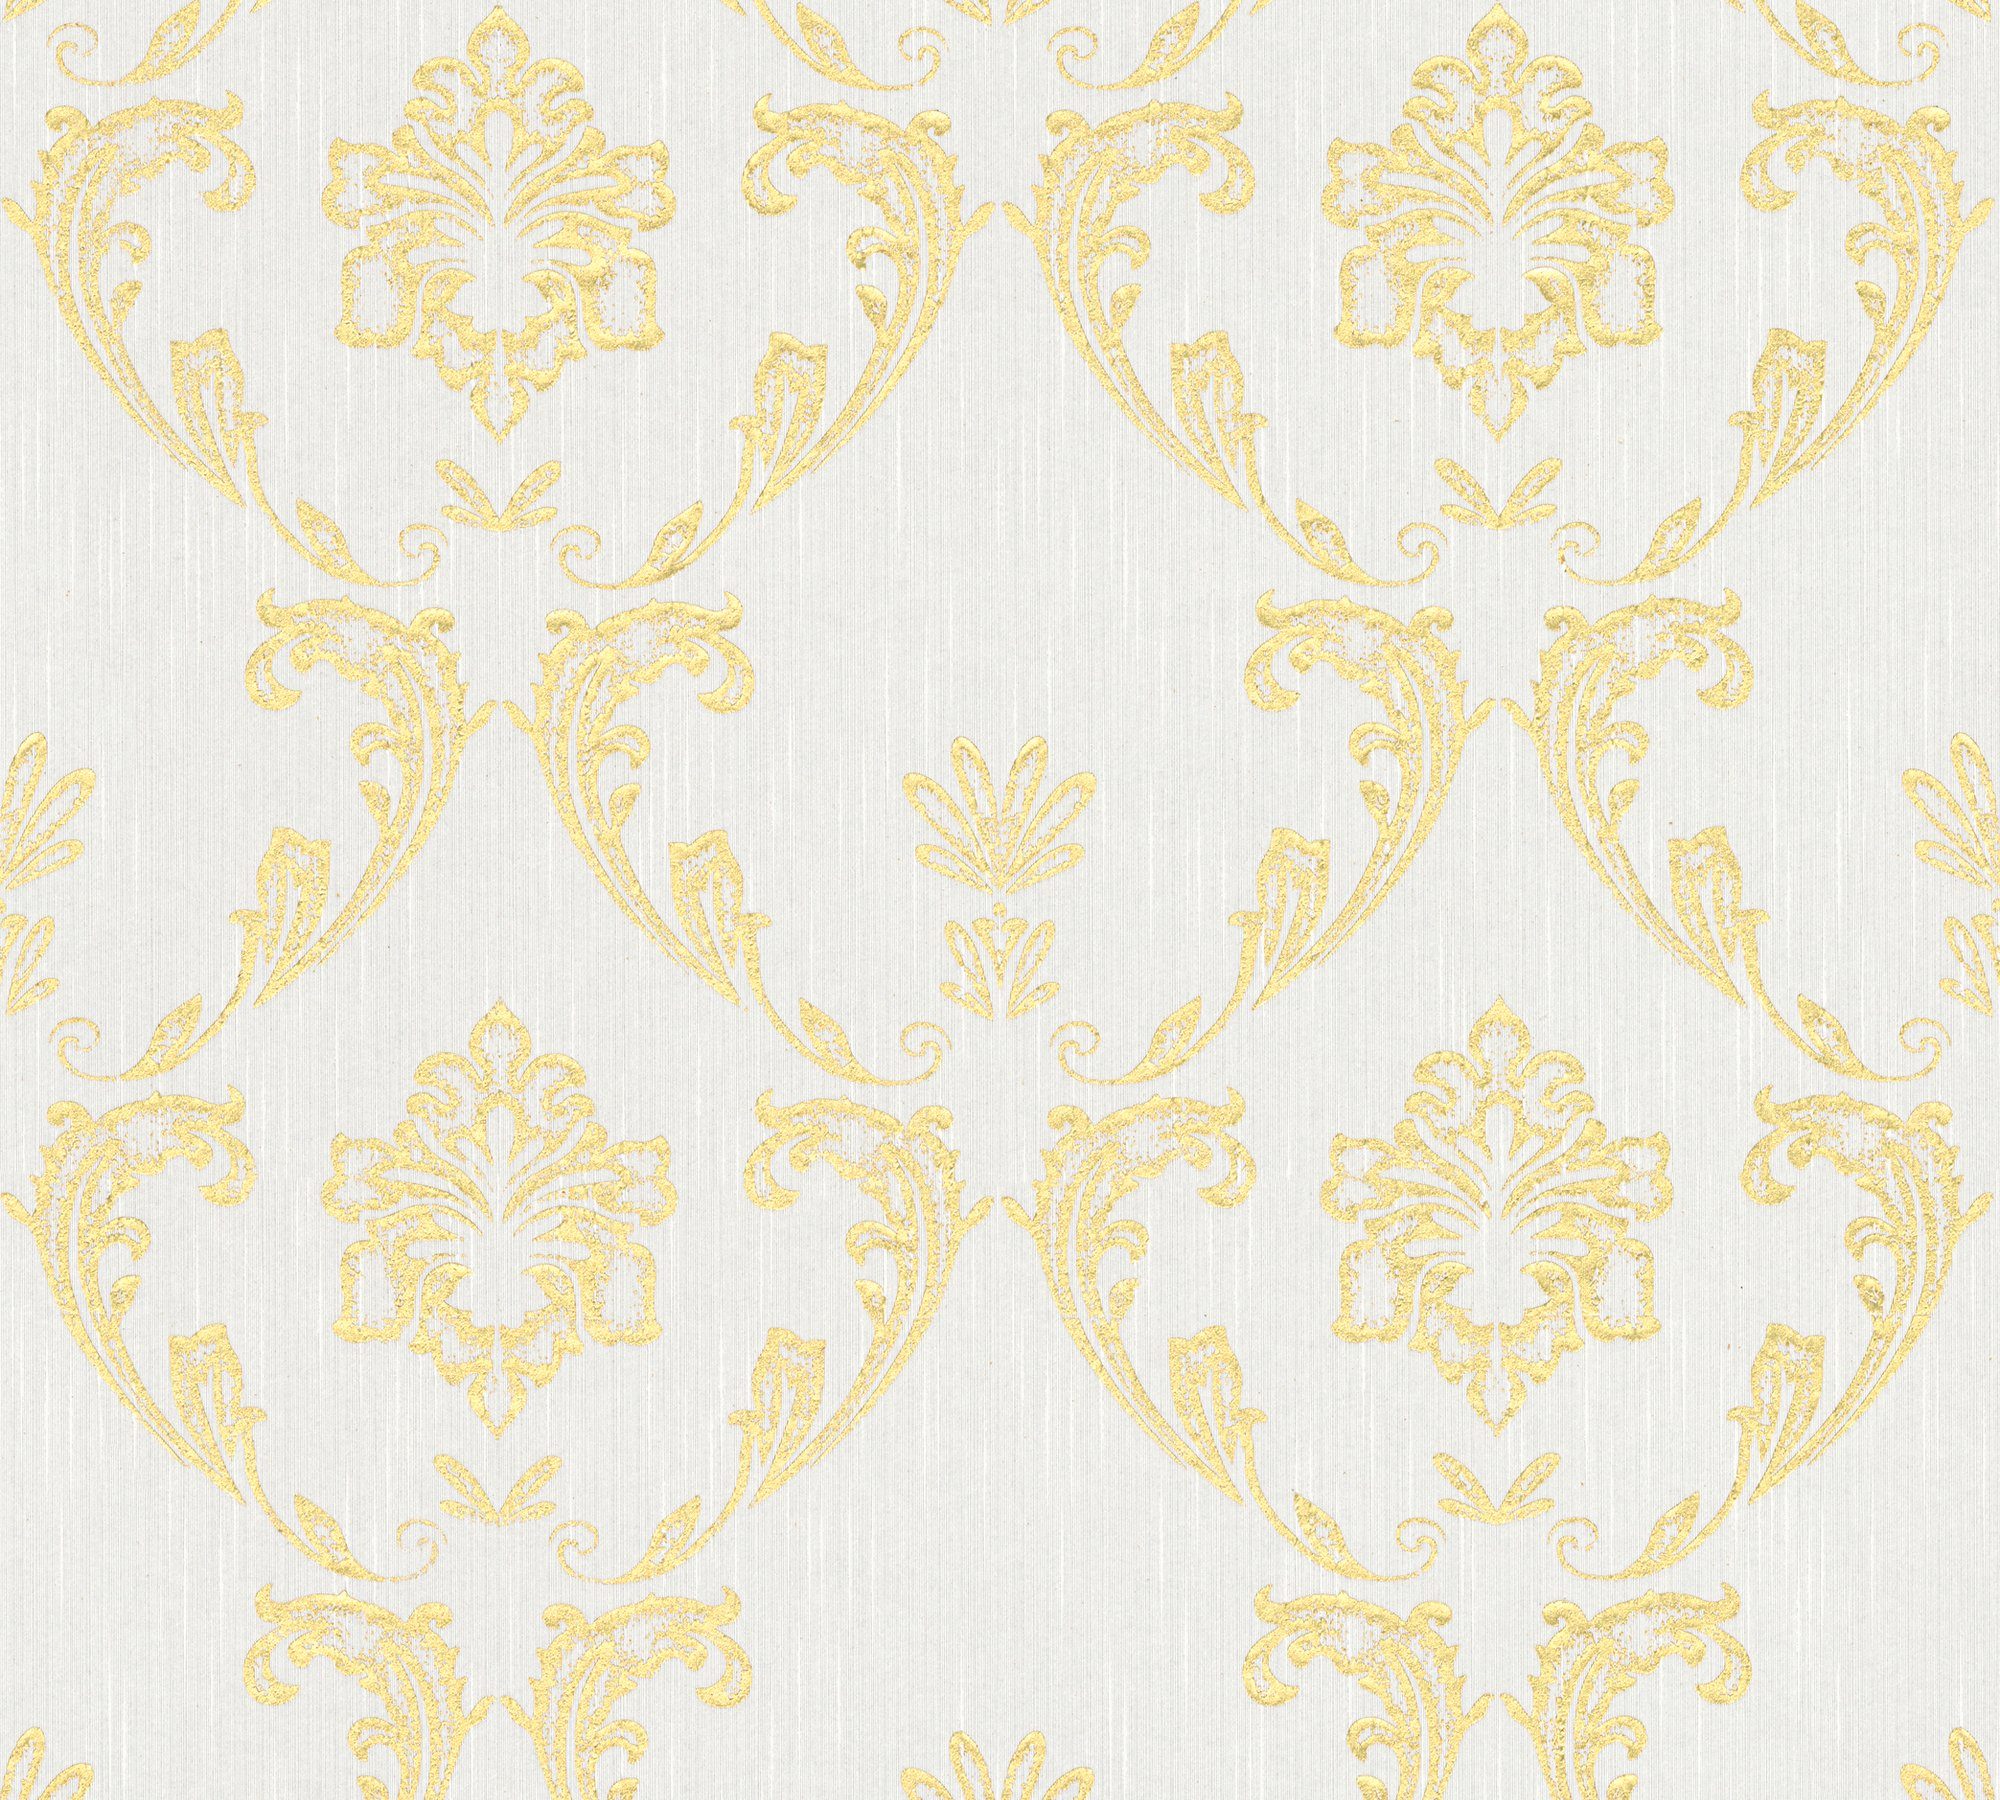 Tapete glänzend, Paper Barock Metallic Textiltapete gold/weiß samtig, Ornament matt, Silk, Barock, Architects